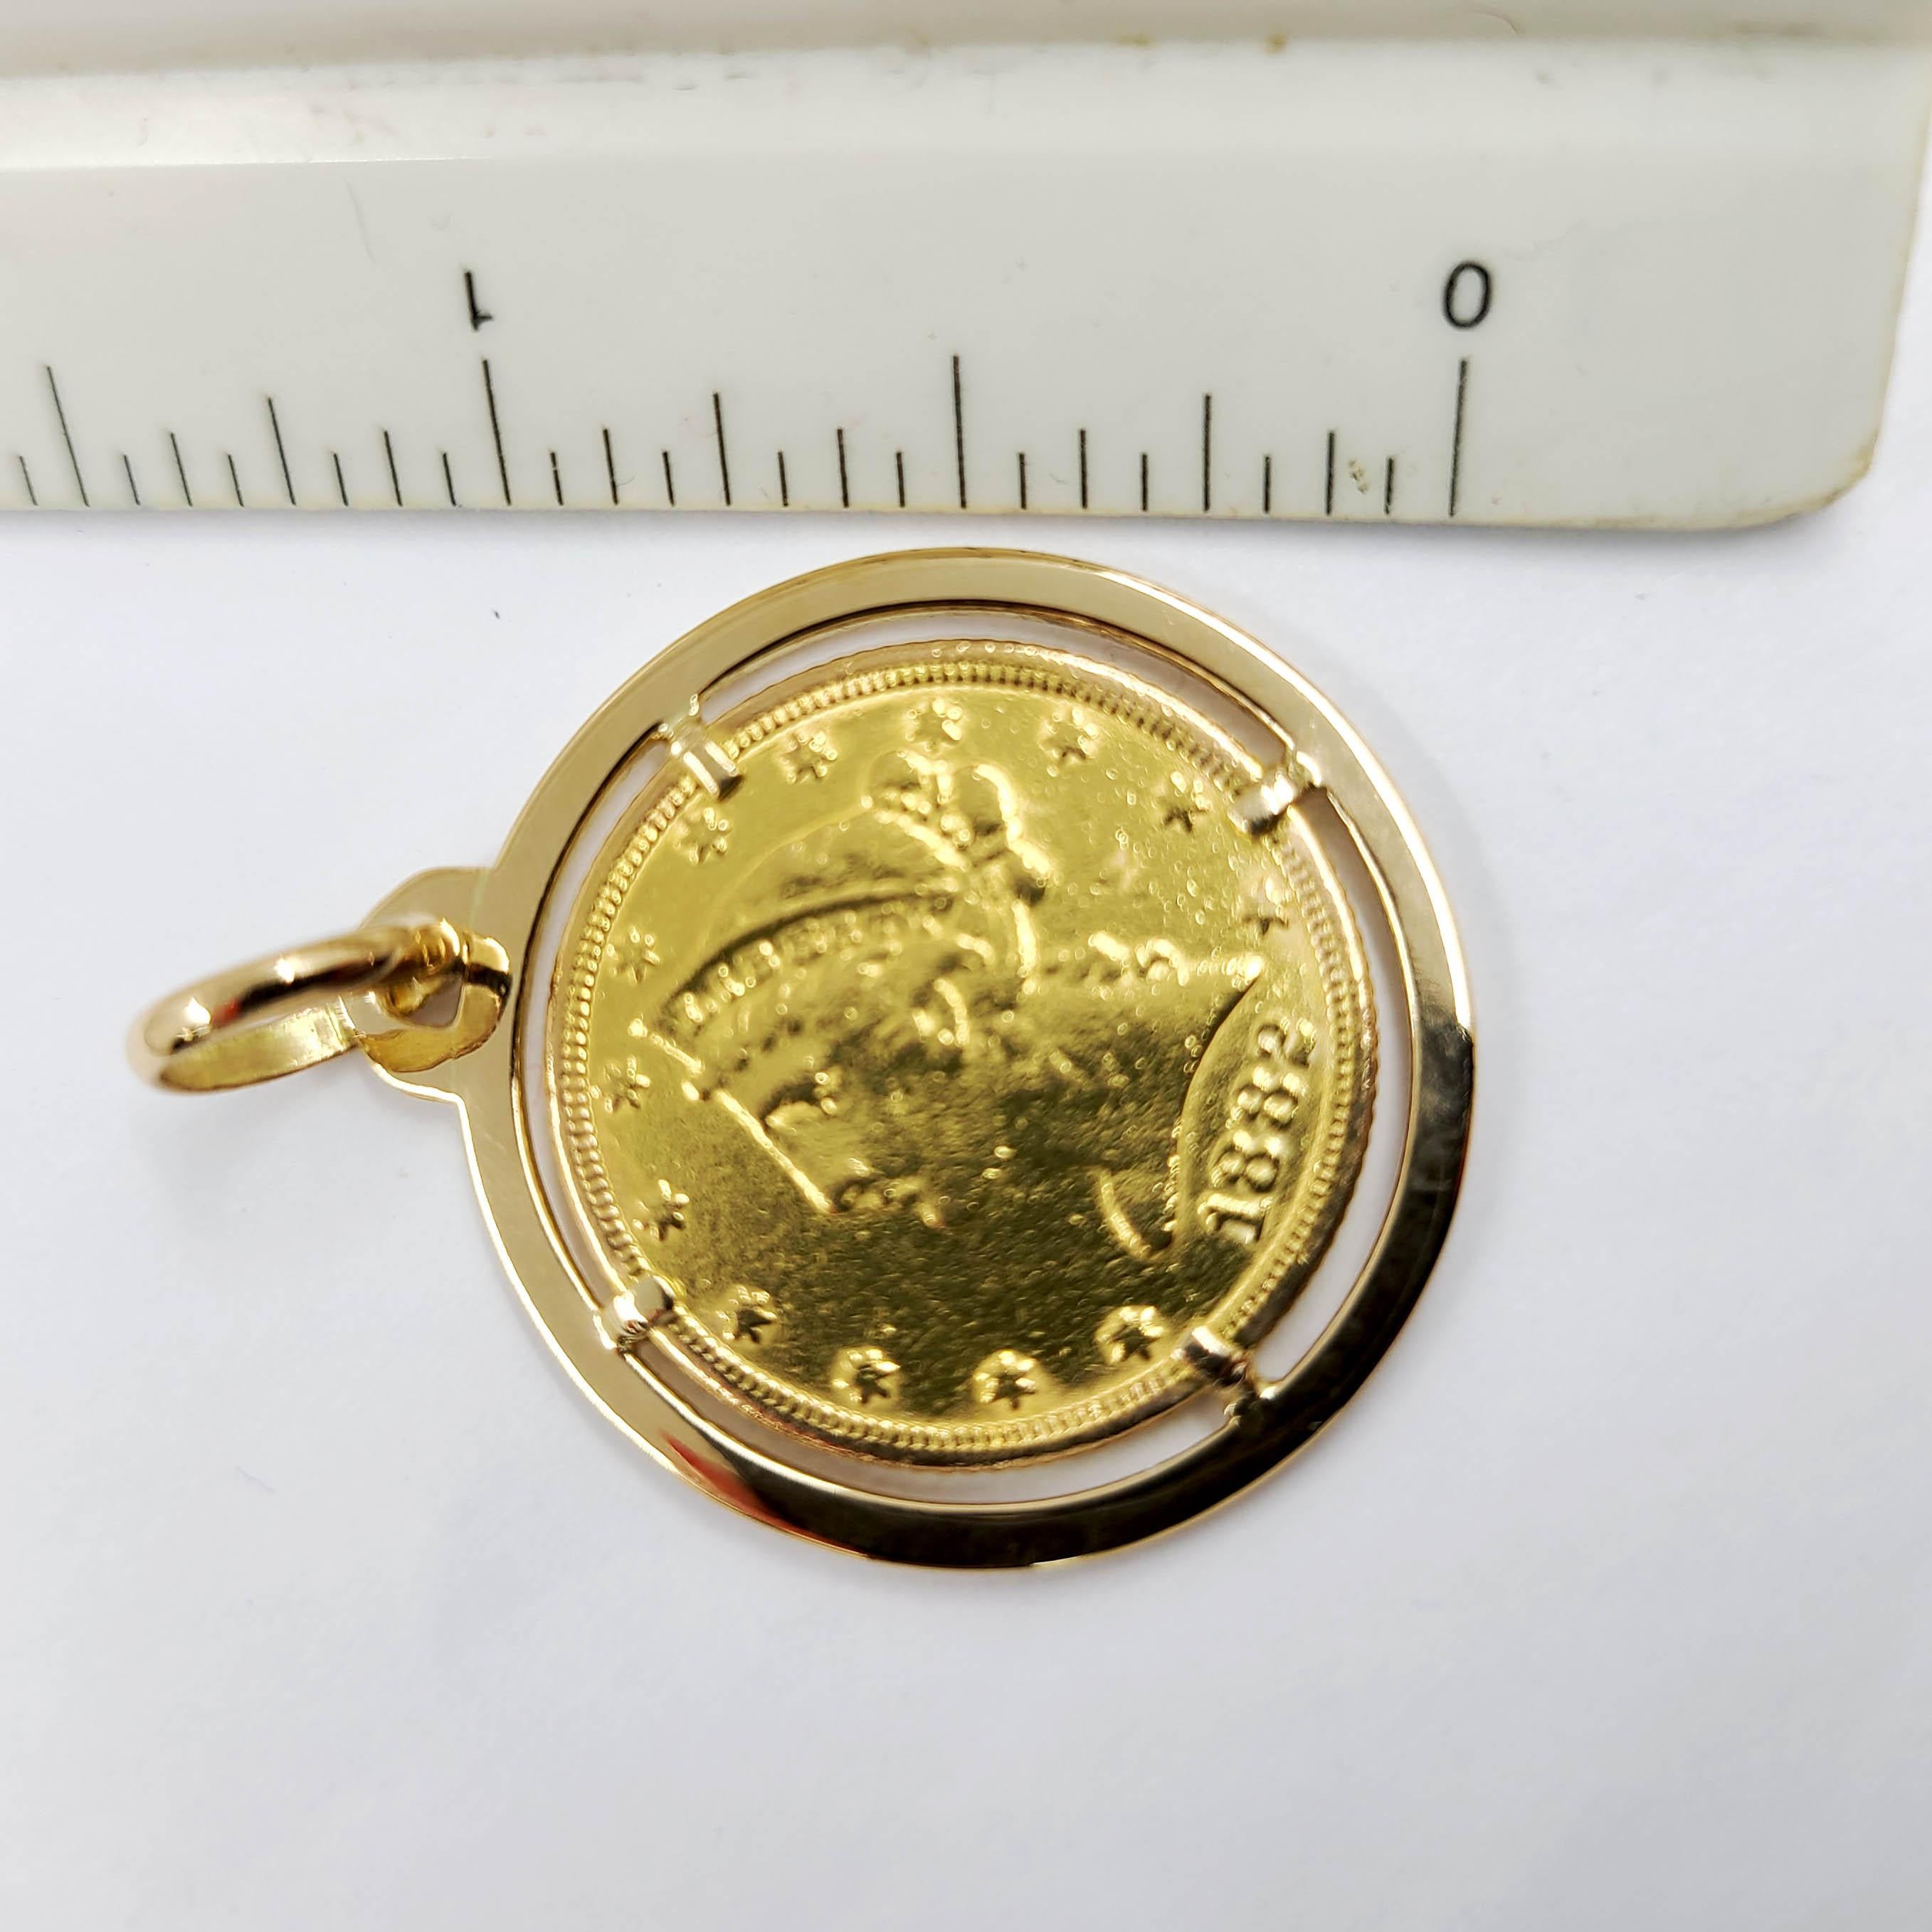 1882 5 dollar gold coin value